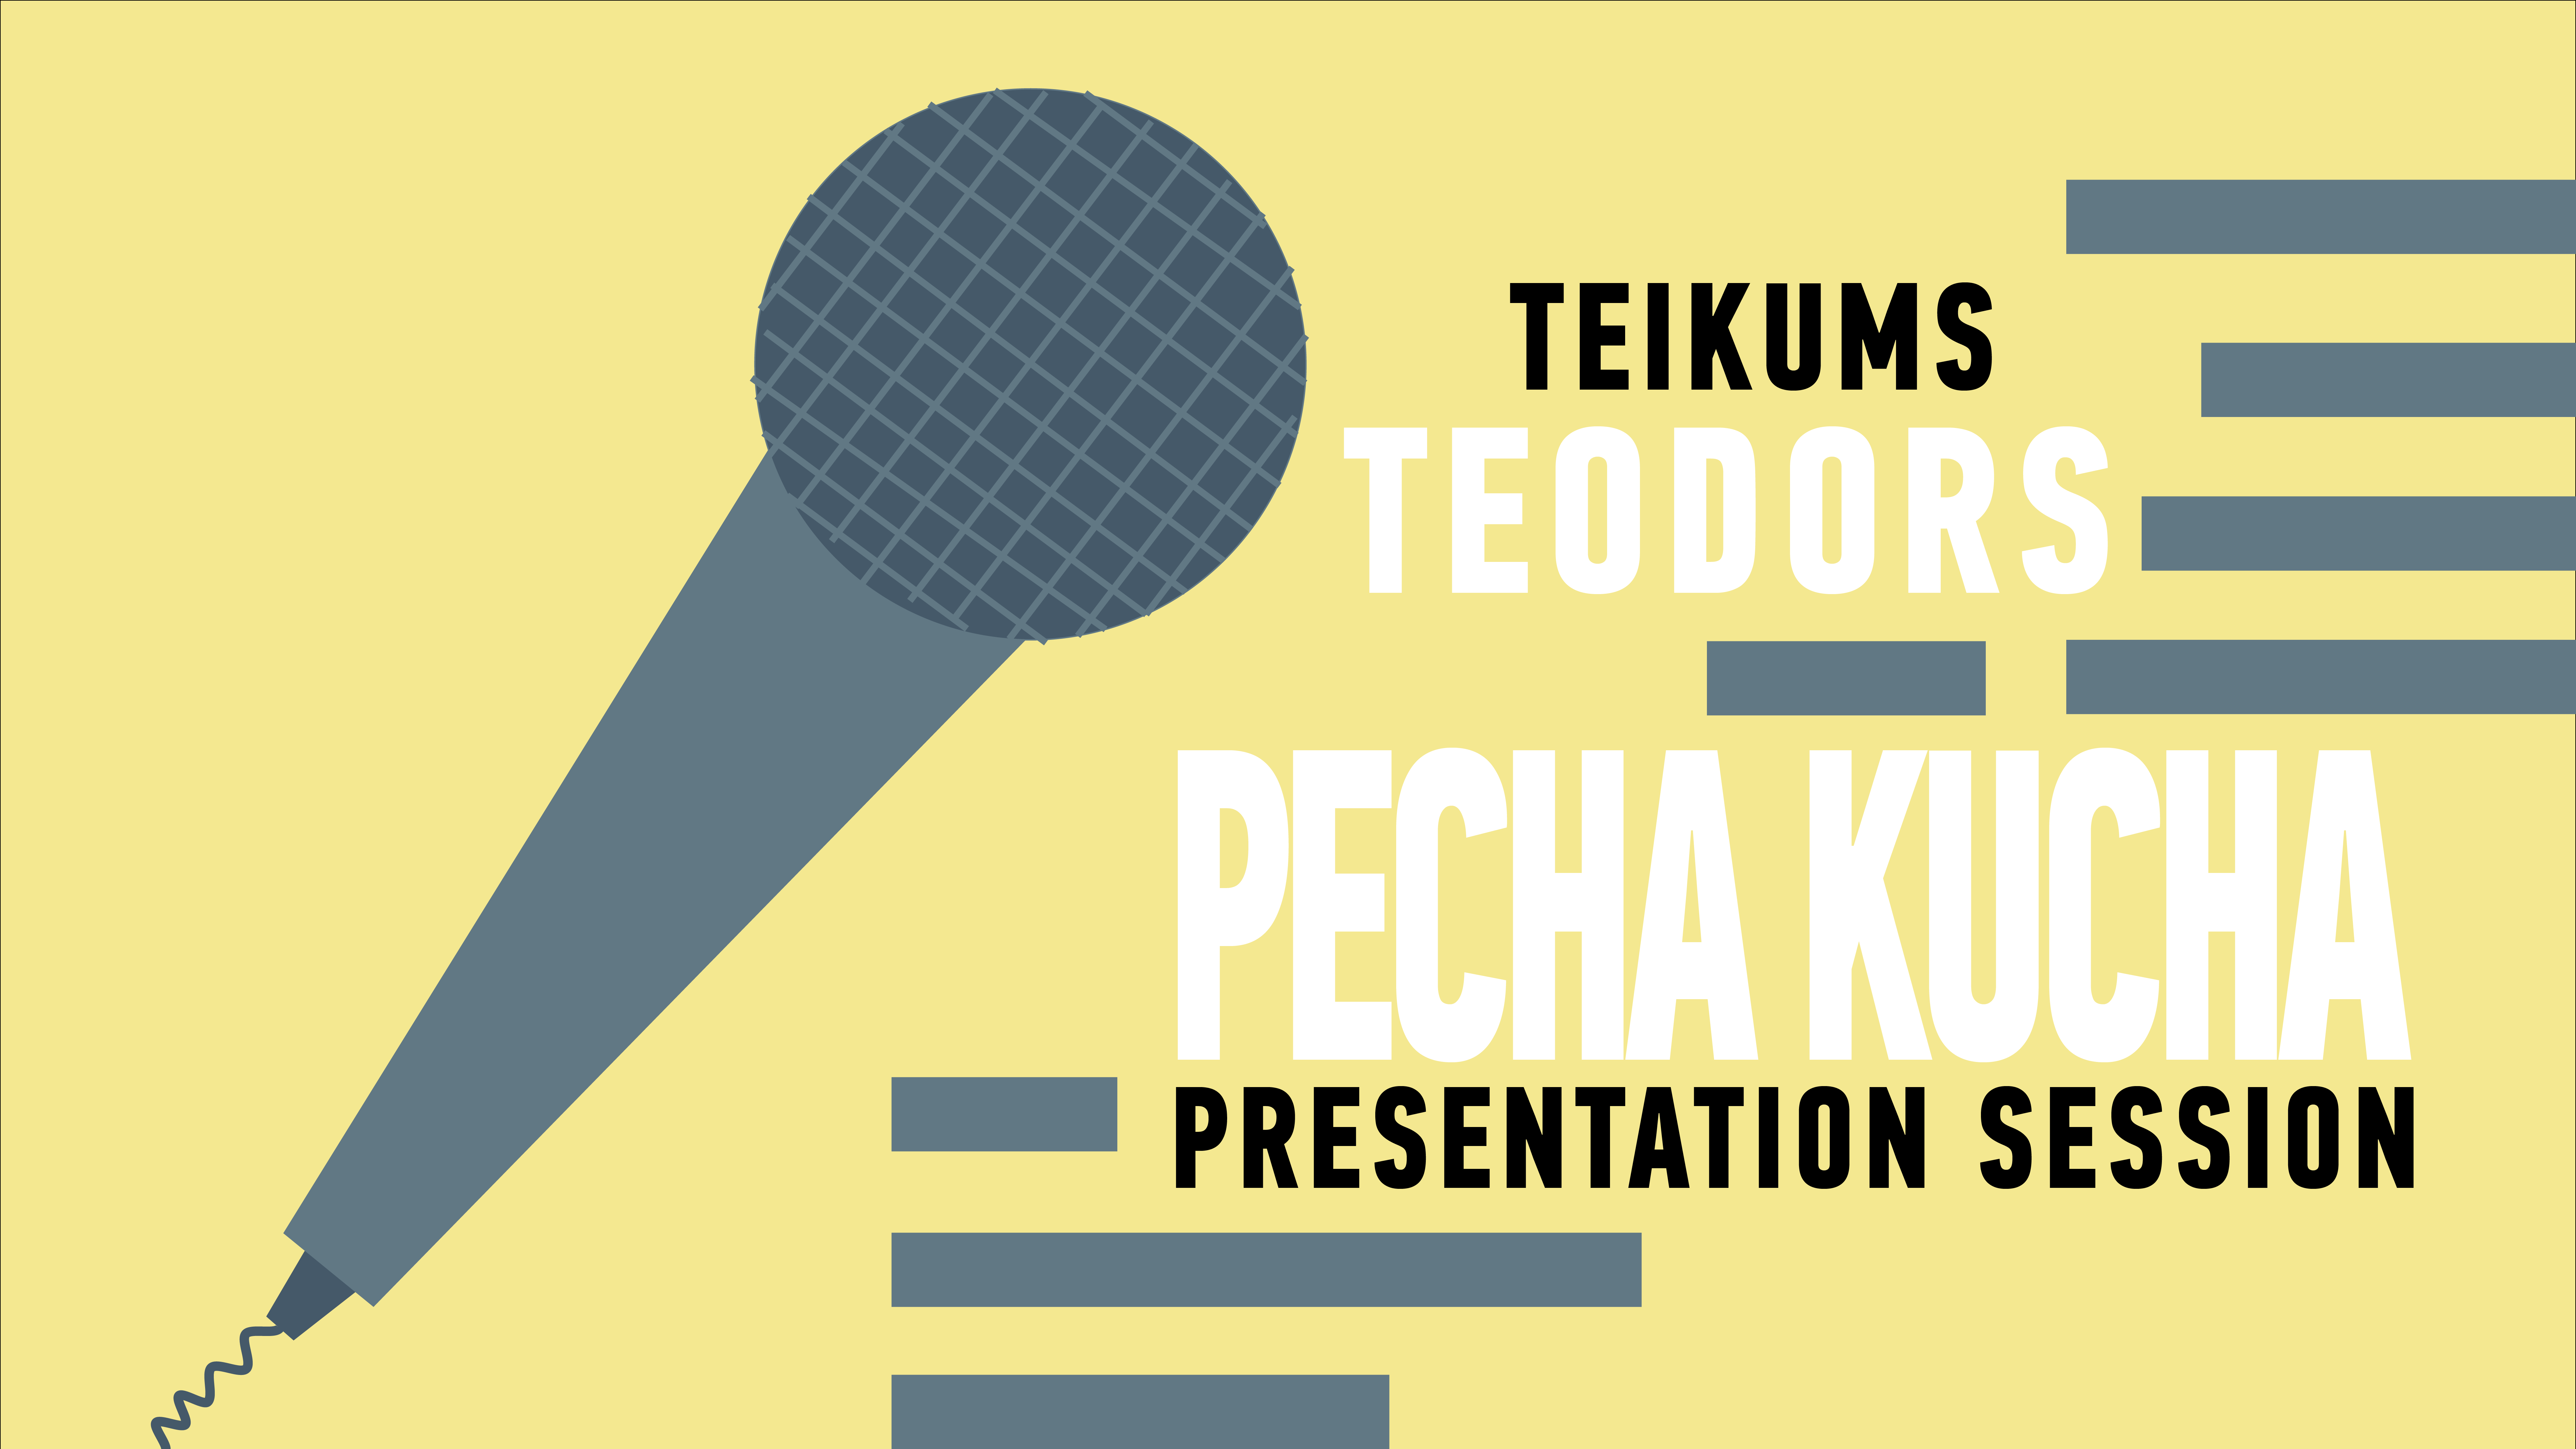 Teikums Teodors Pecha Kucha presentation session